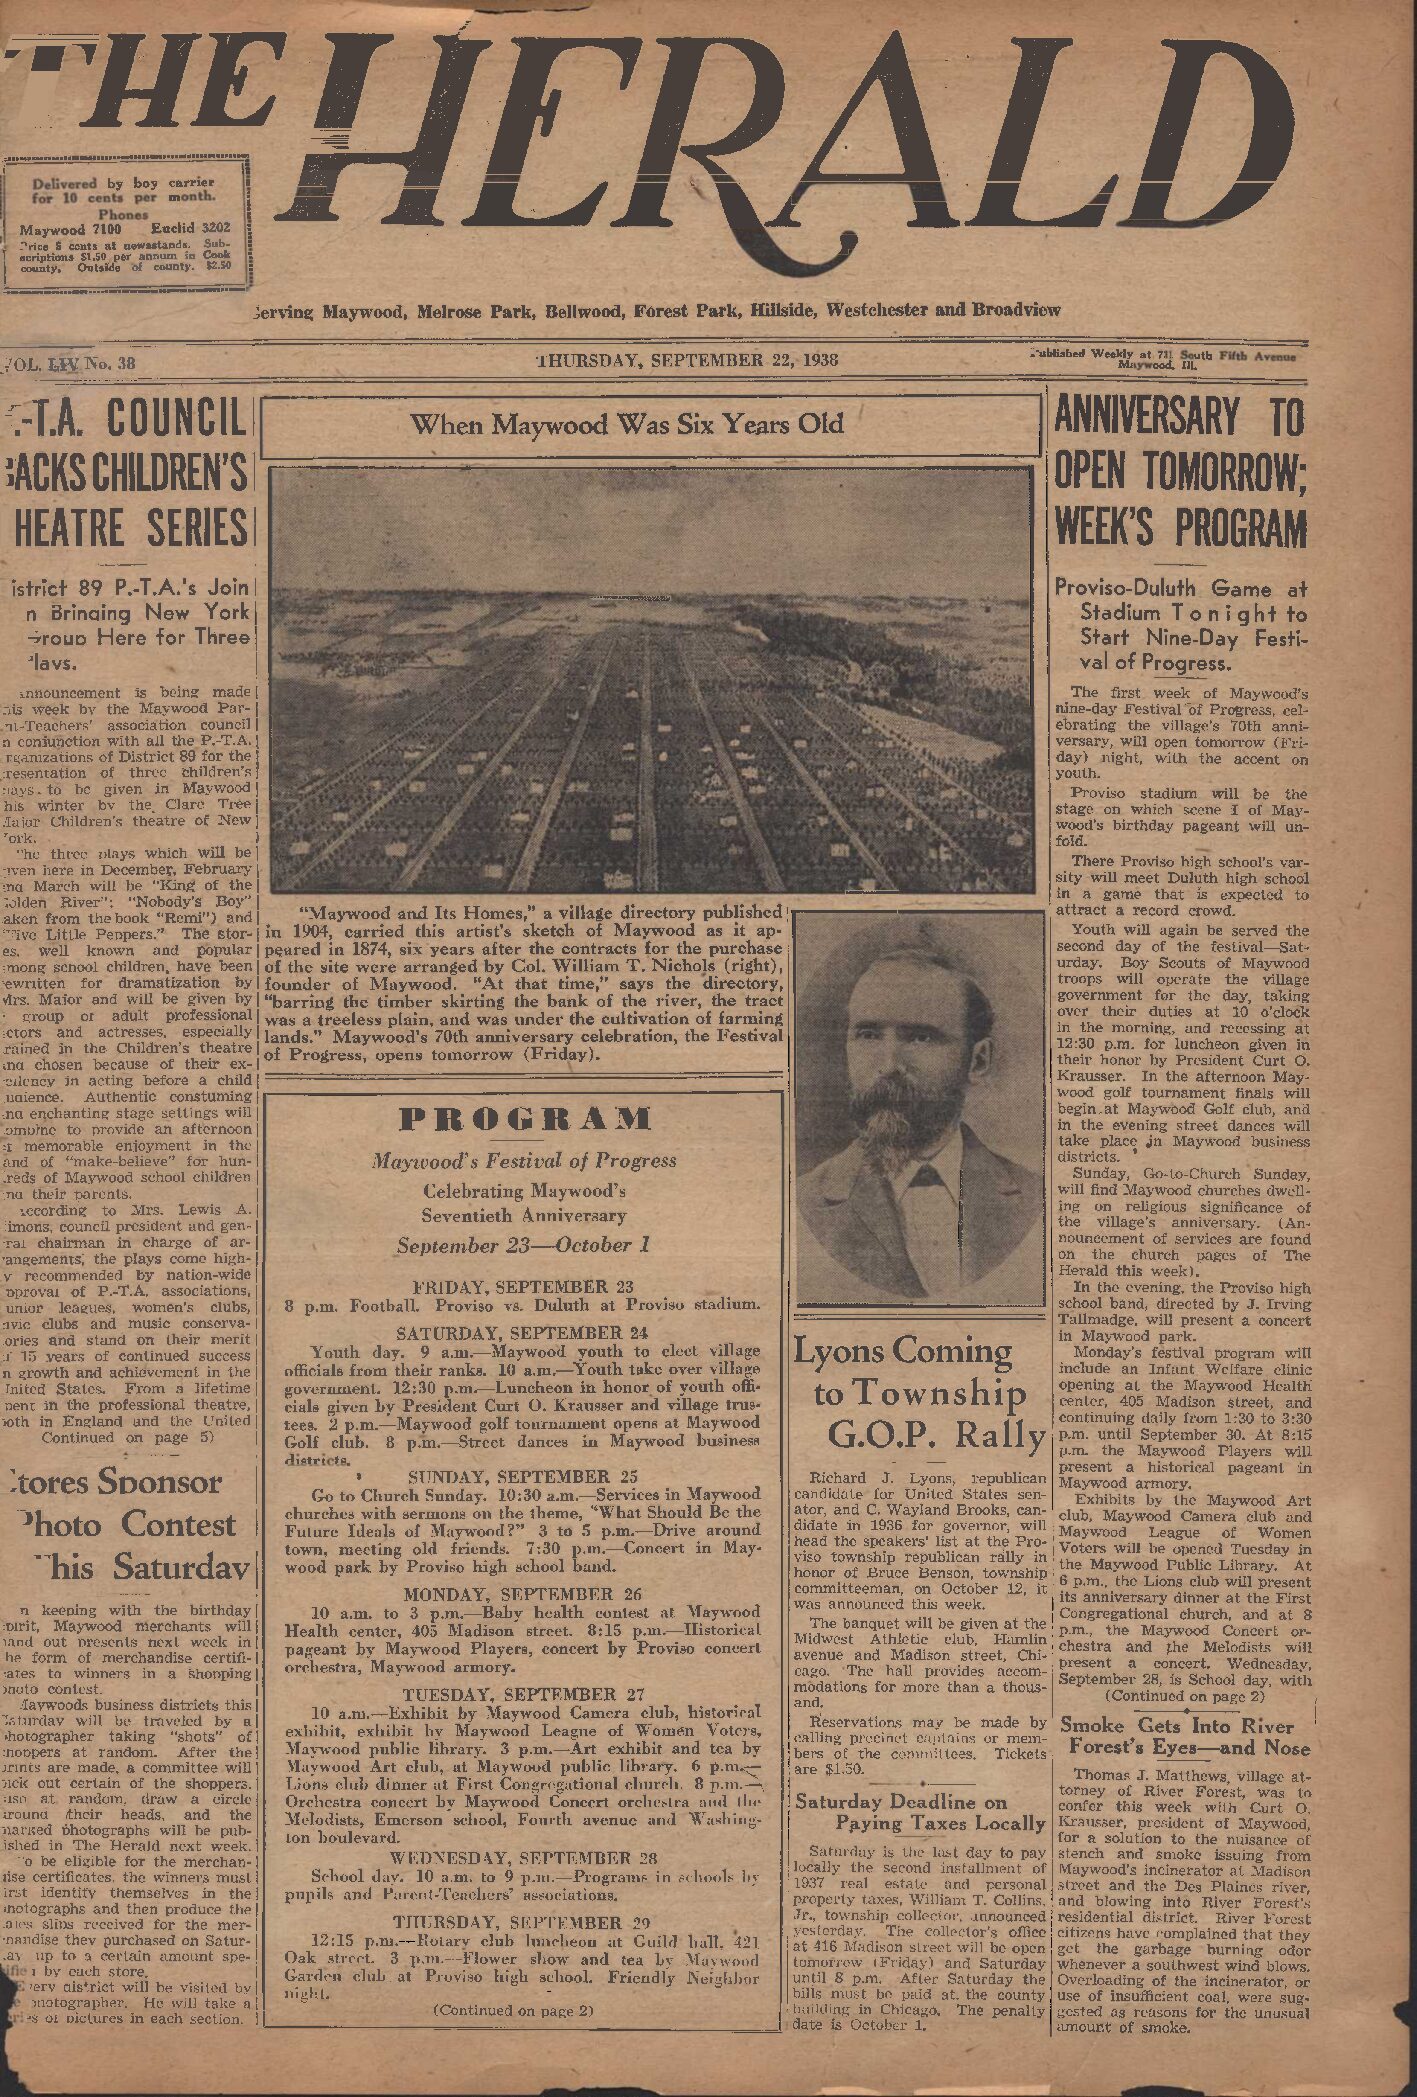 The Herald – 19380922